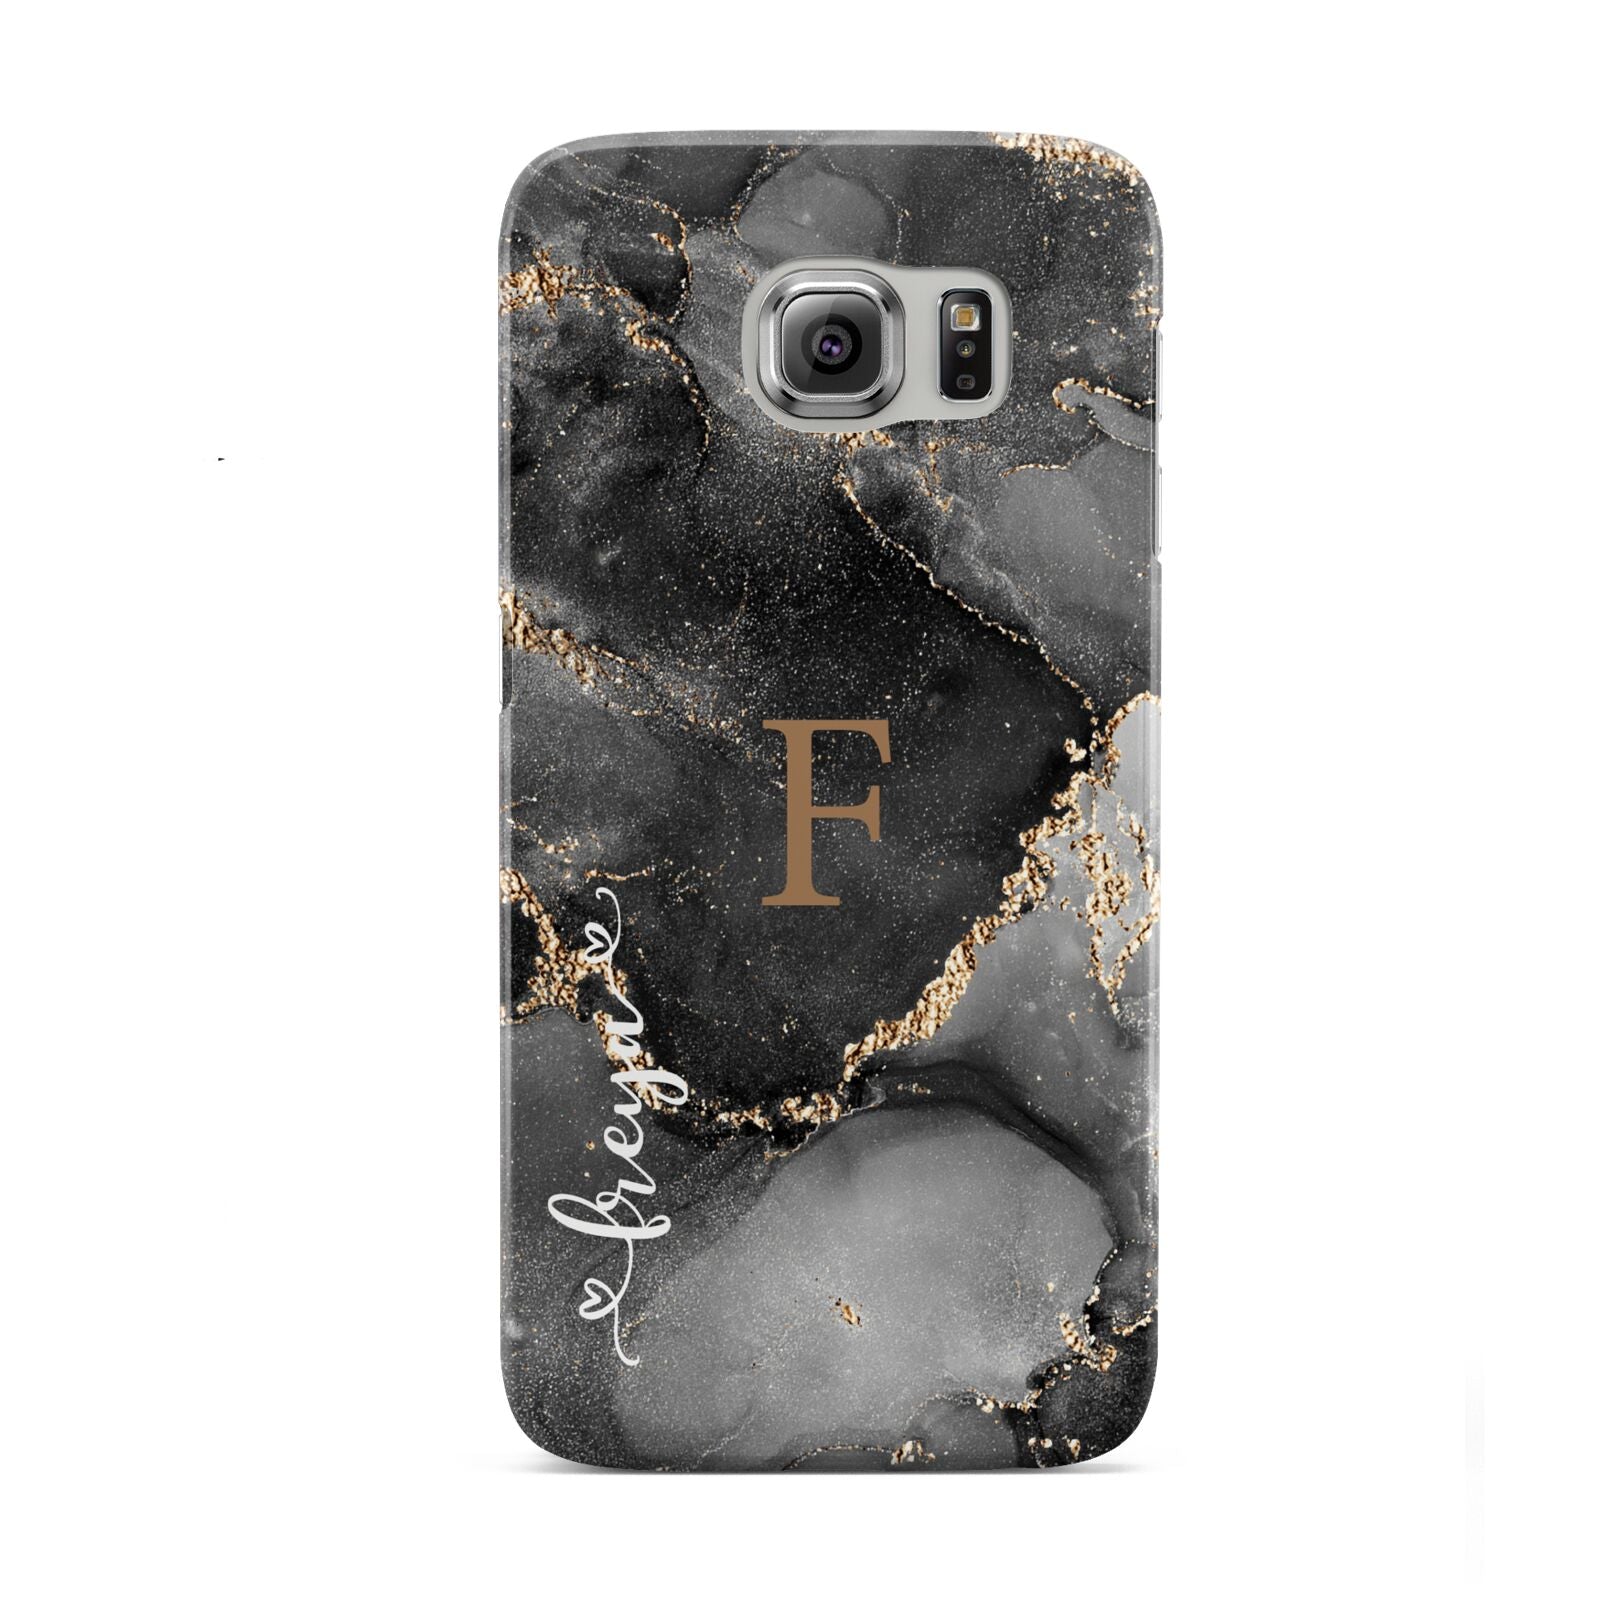 Black Marble Samsung Galaxy S6 Case